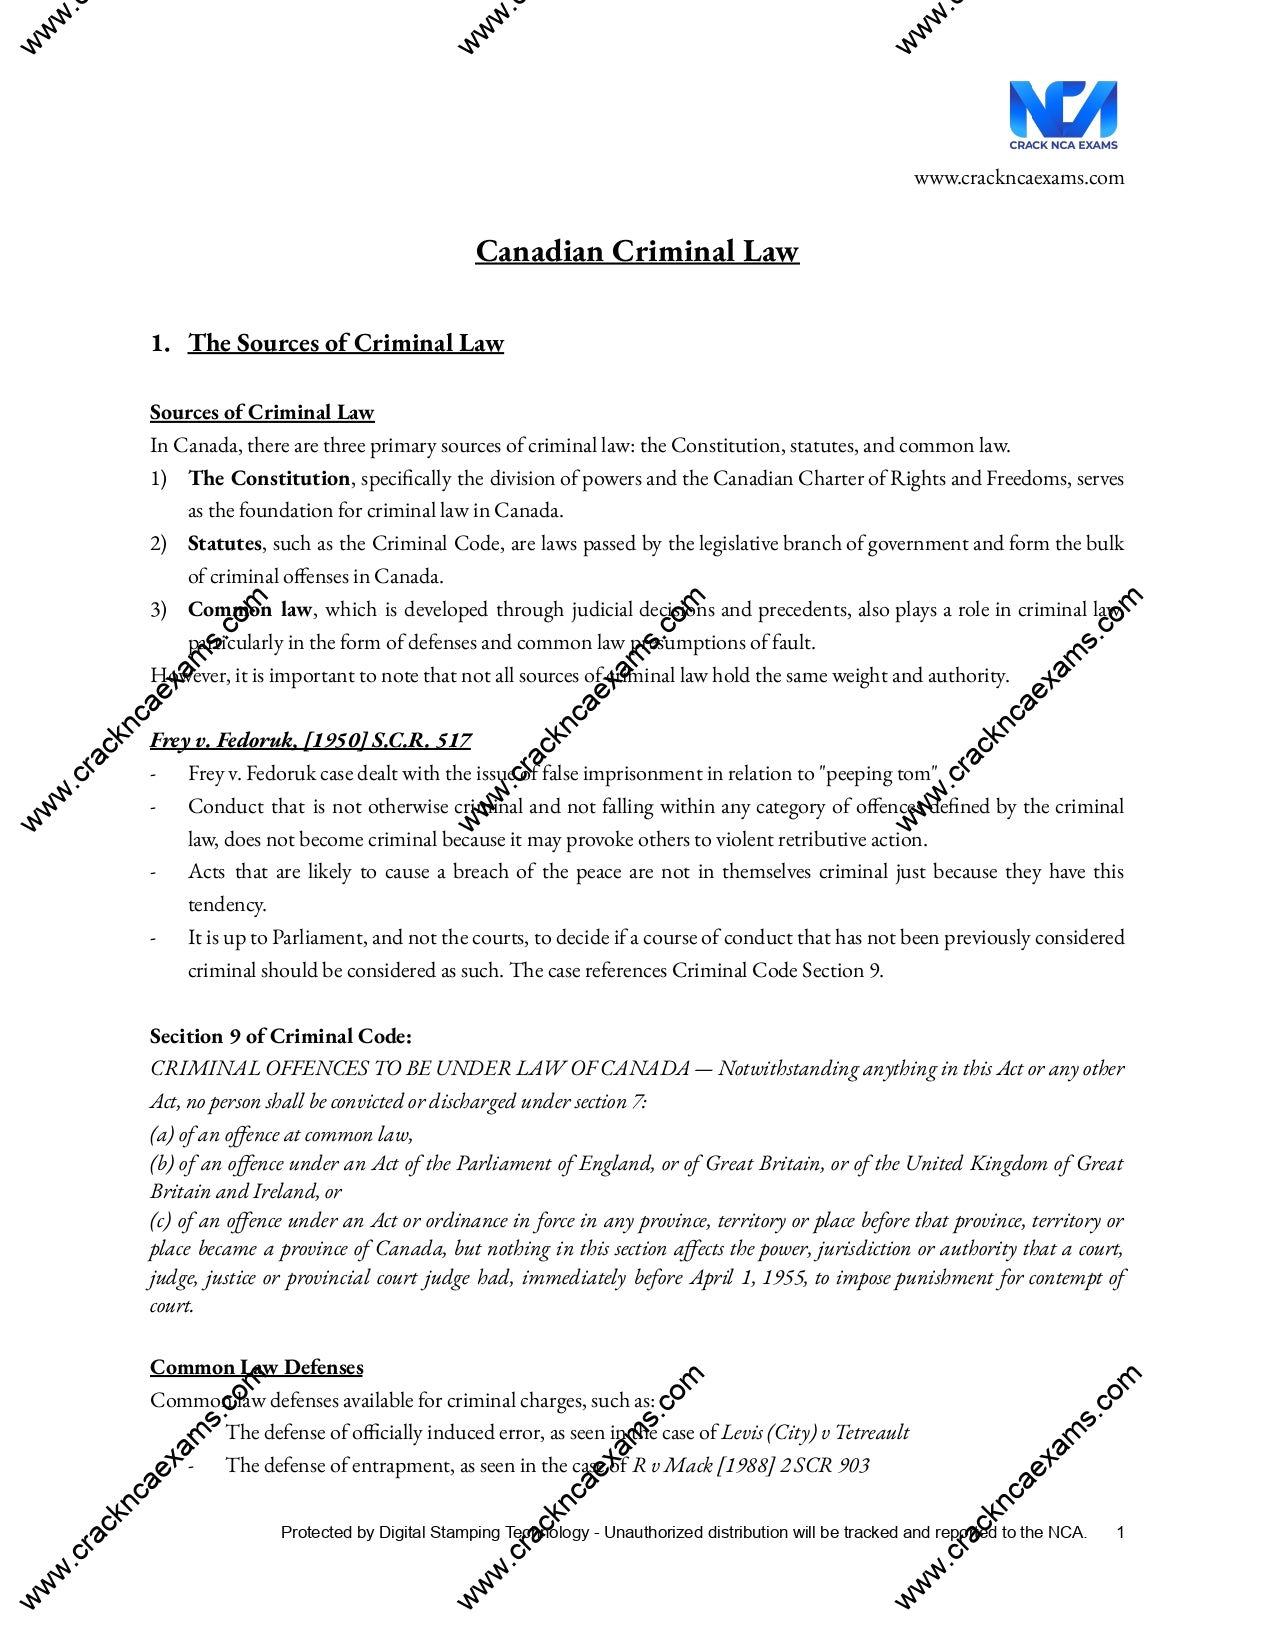 Canadian Criminal Law (November 2022 version) UPDATED + IRACs